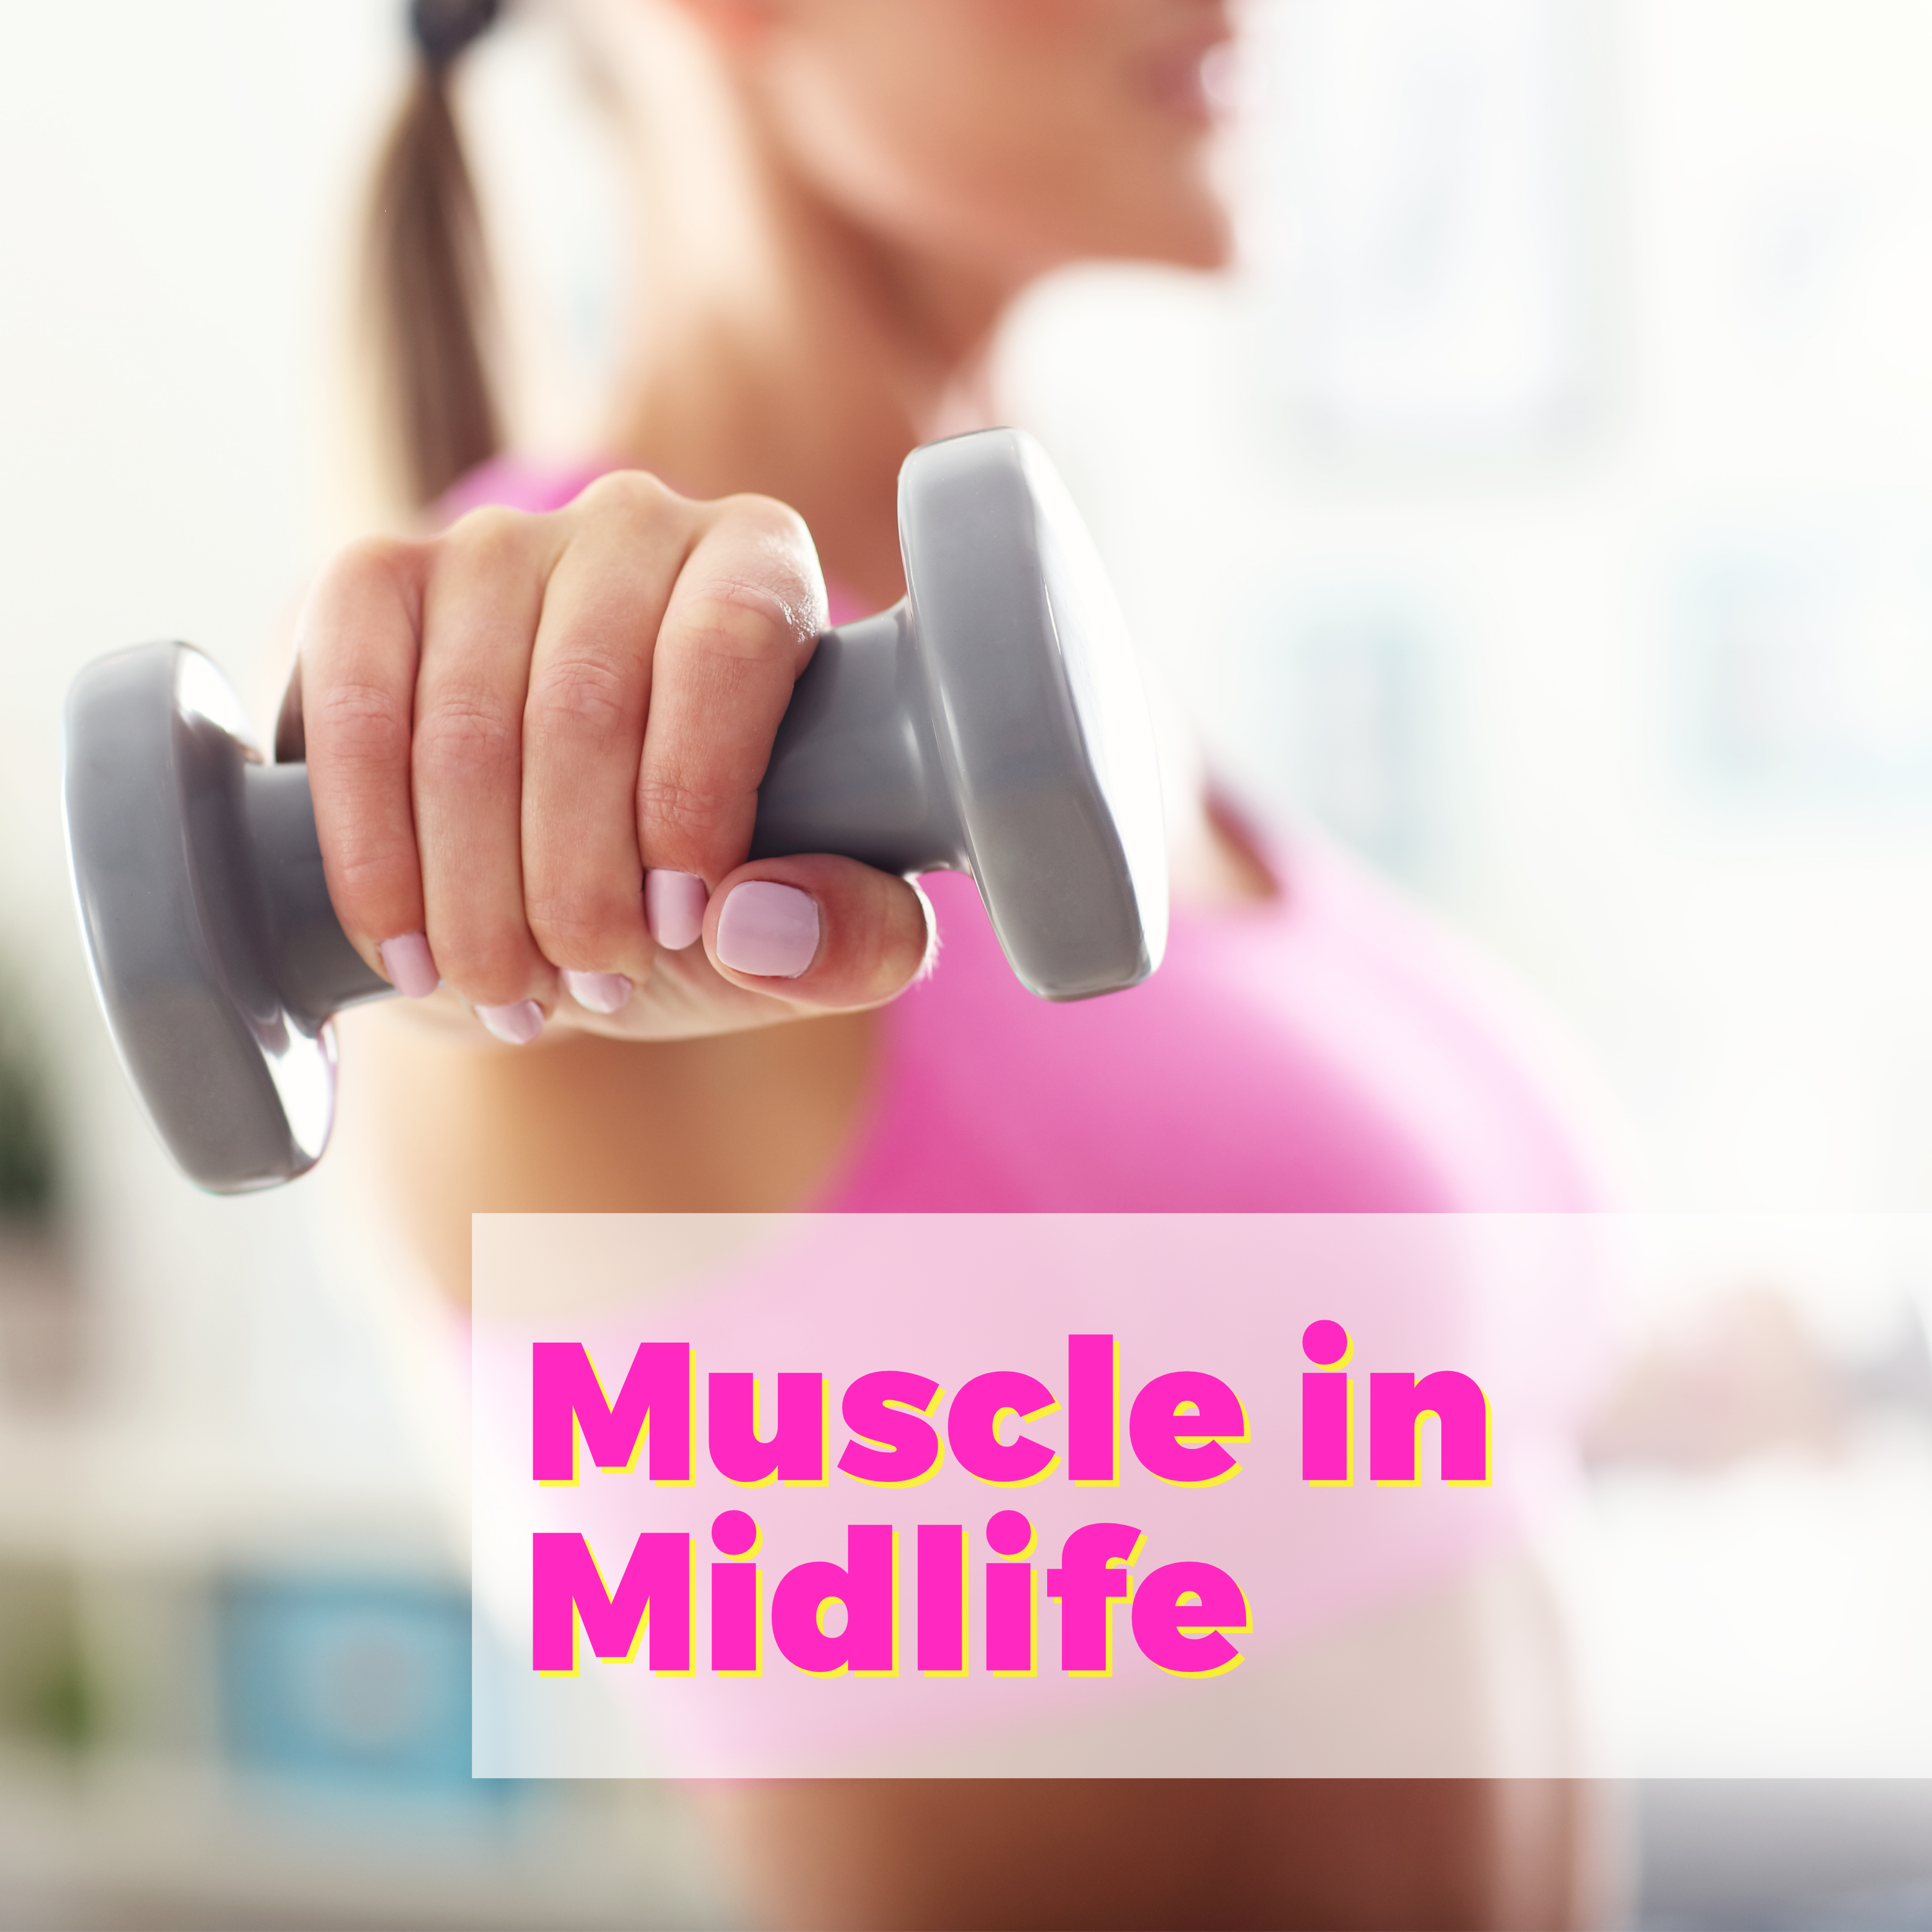 importance of building muscle in midlife natalie jill tara garrison